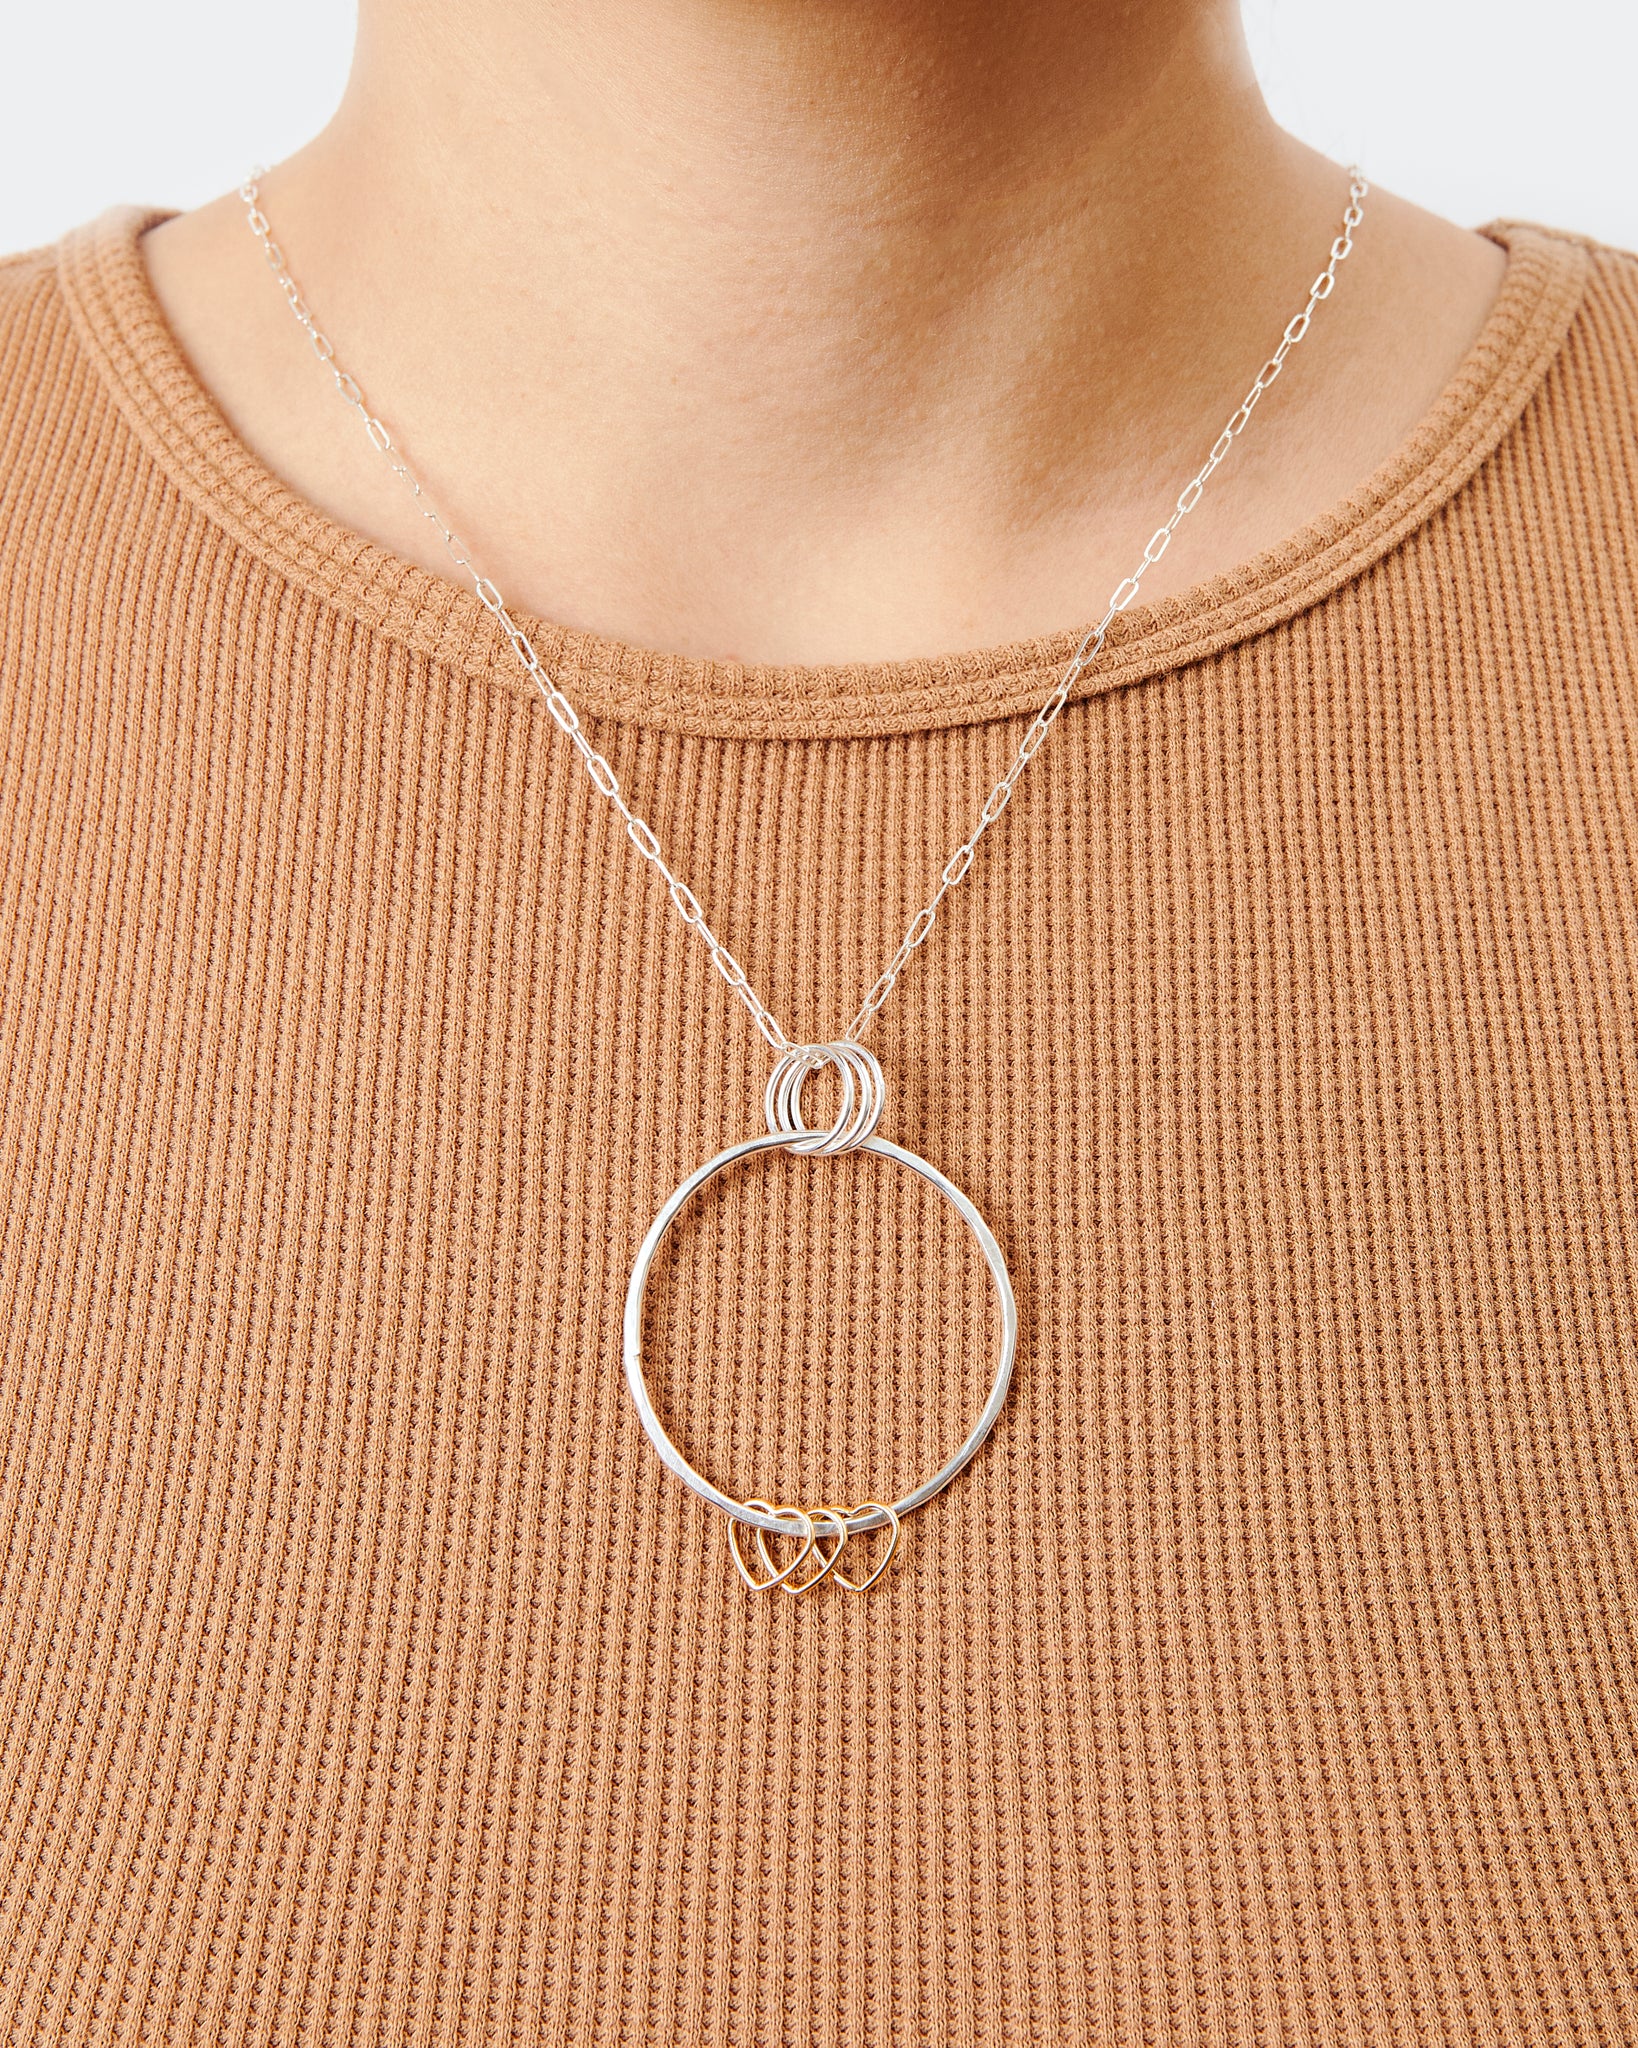 Willa Heart Charm - Fidget Necklace